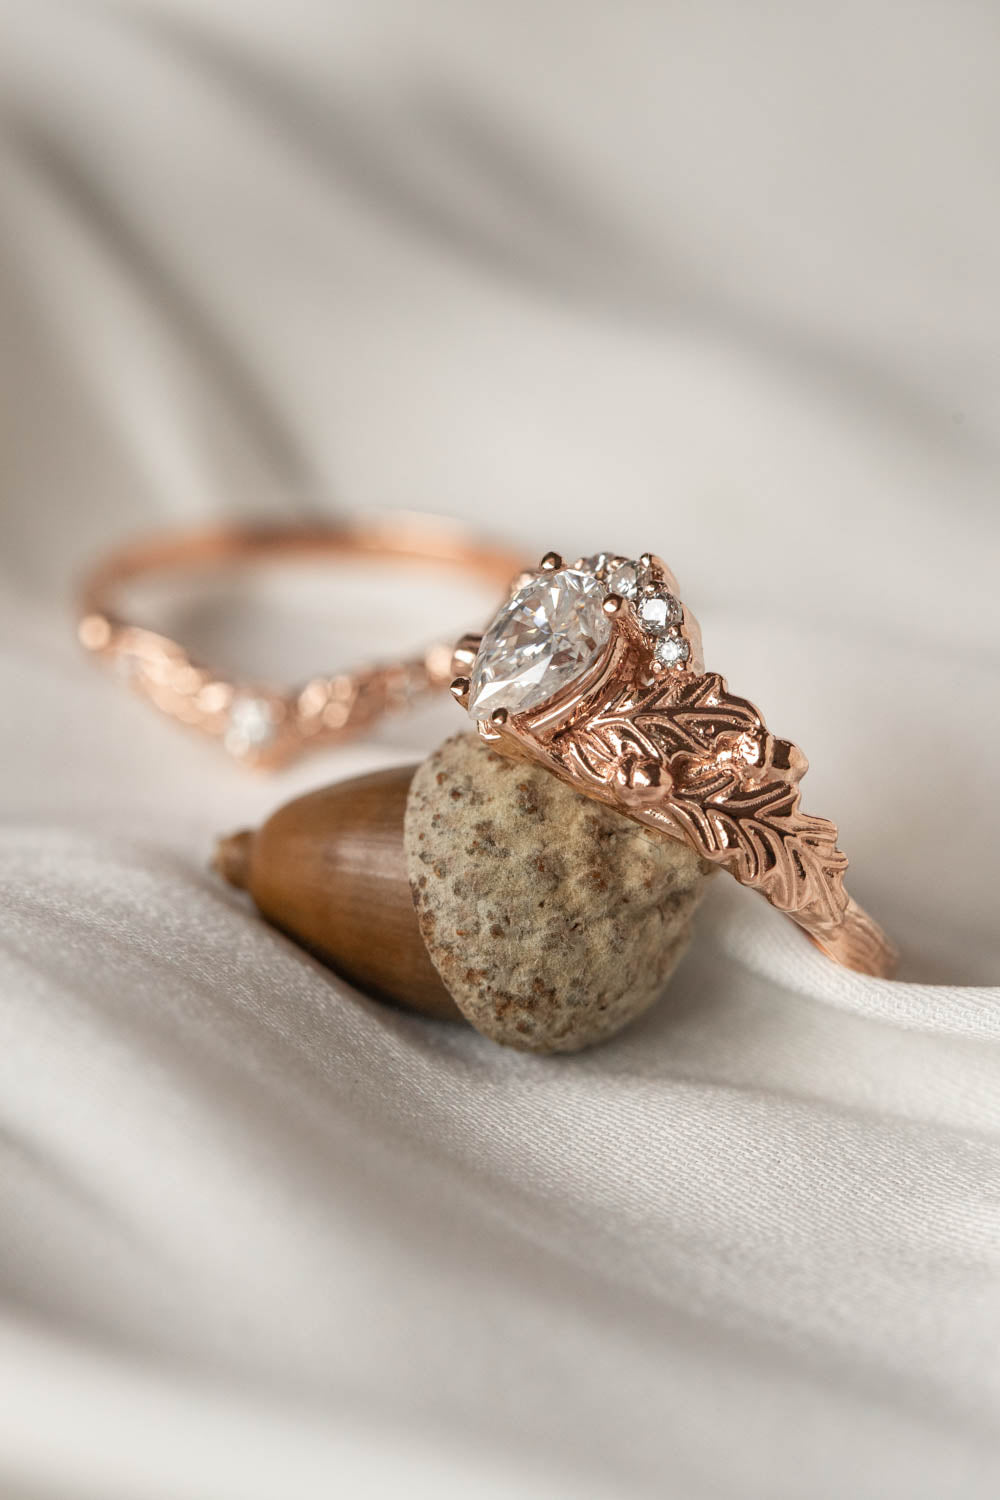 Leaves Engagement Ring - Moissanite Rings and Diamond Rings